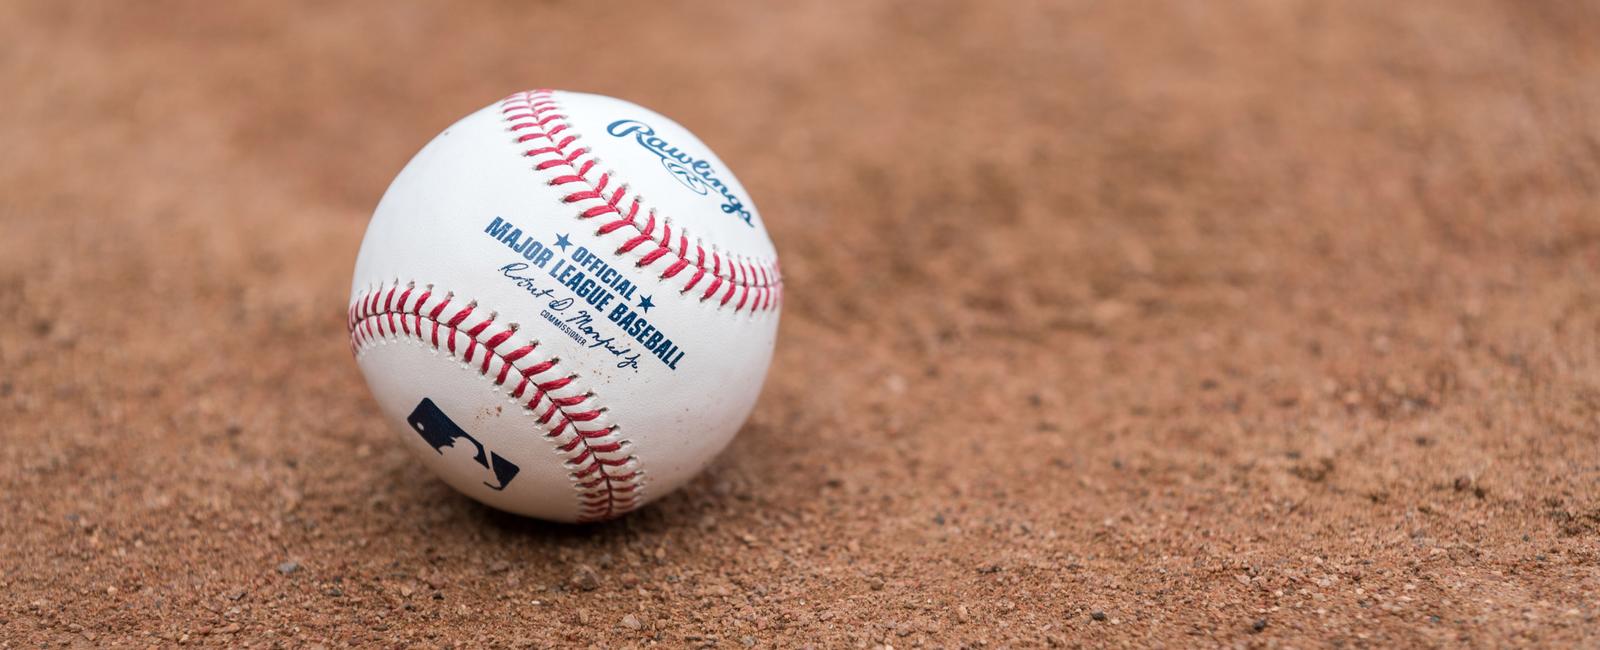 Regulation major league baseball feature exactly 108 stitches